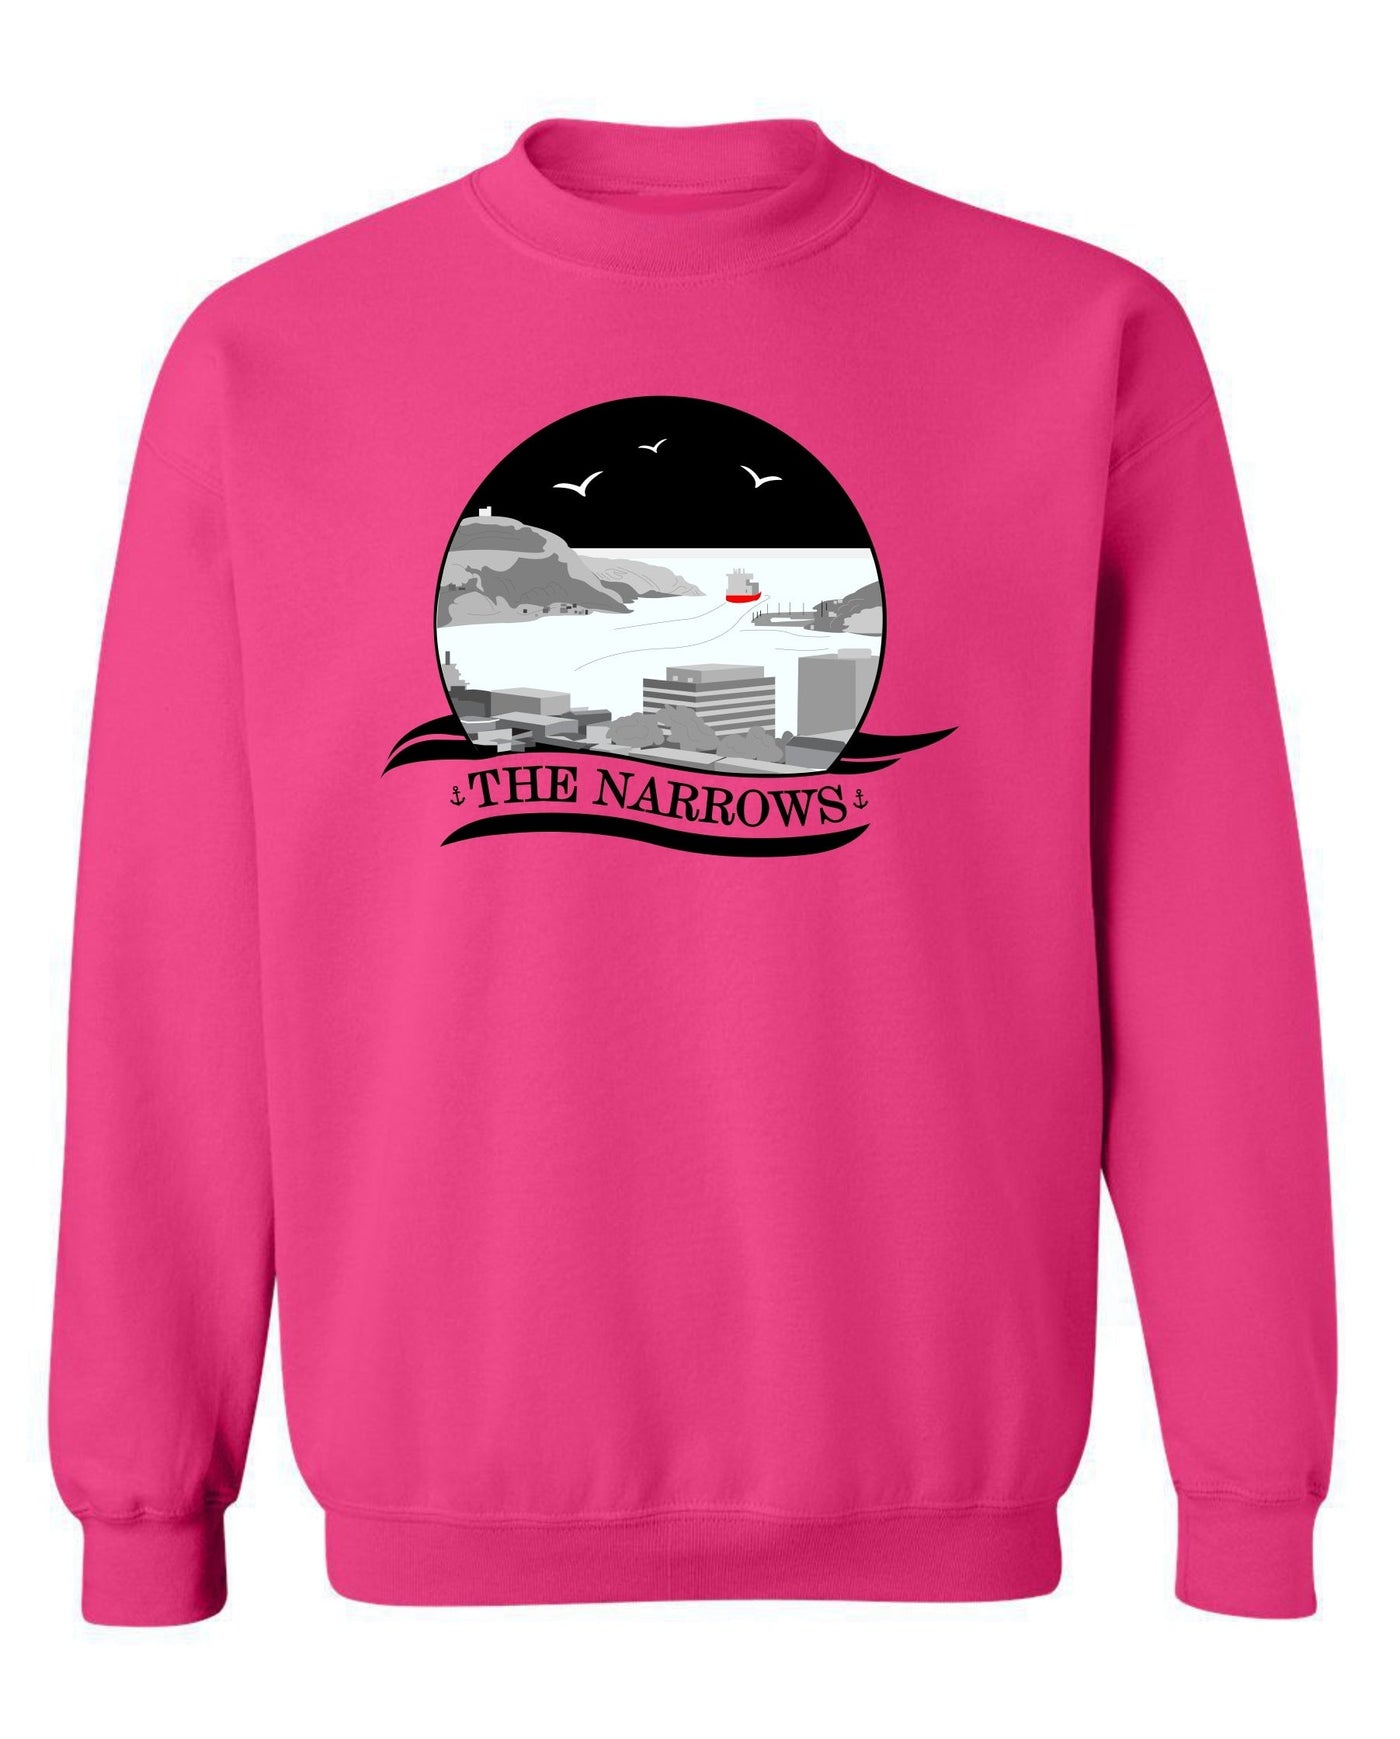 "The Narrows" Unisex Crewneck Sweatshirt